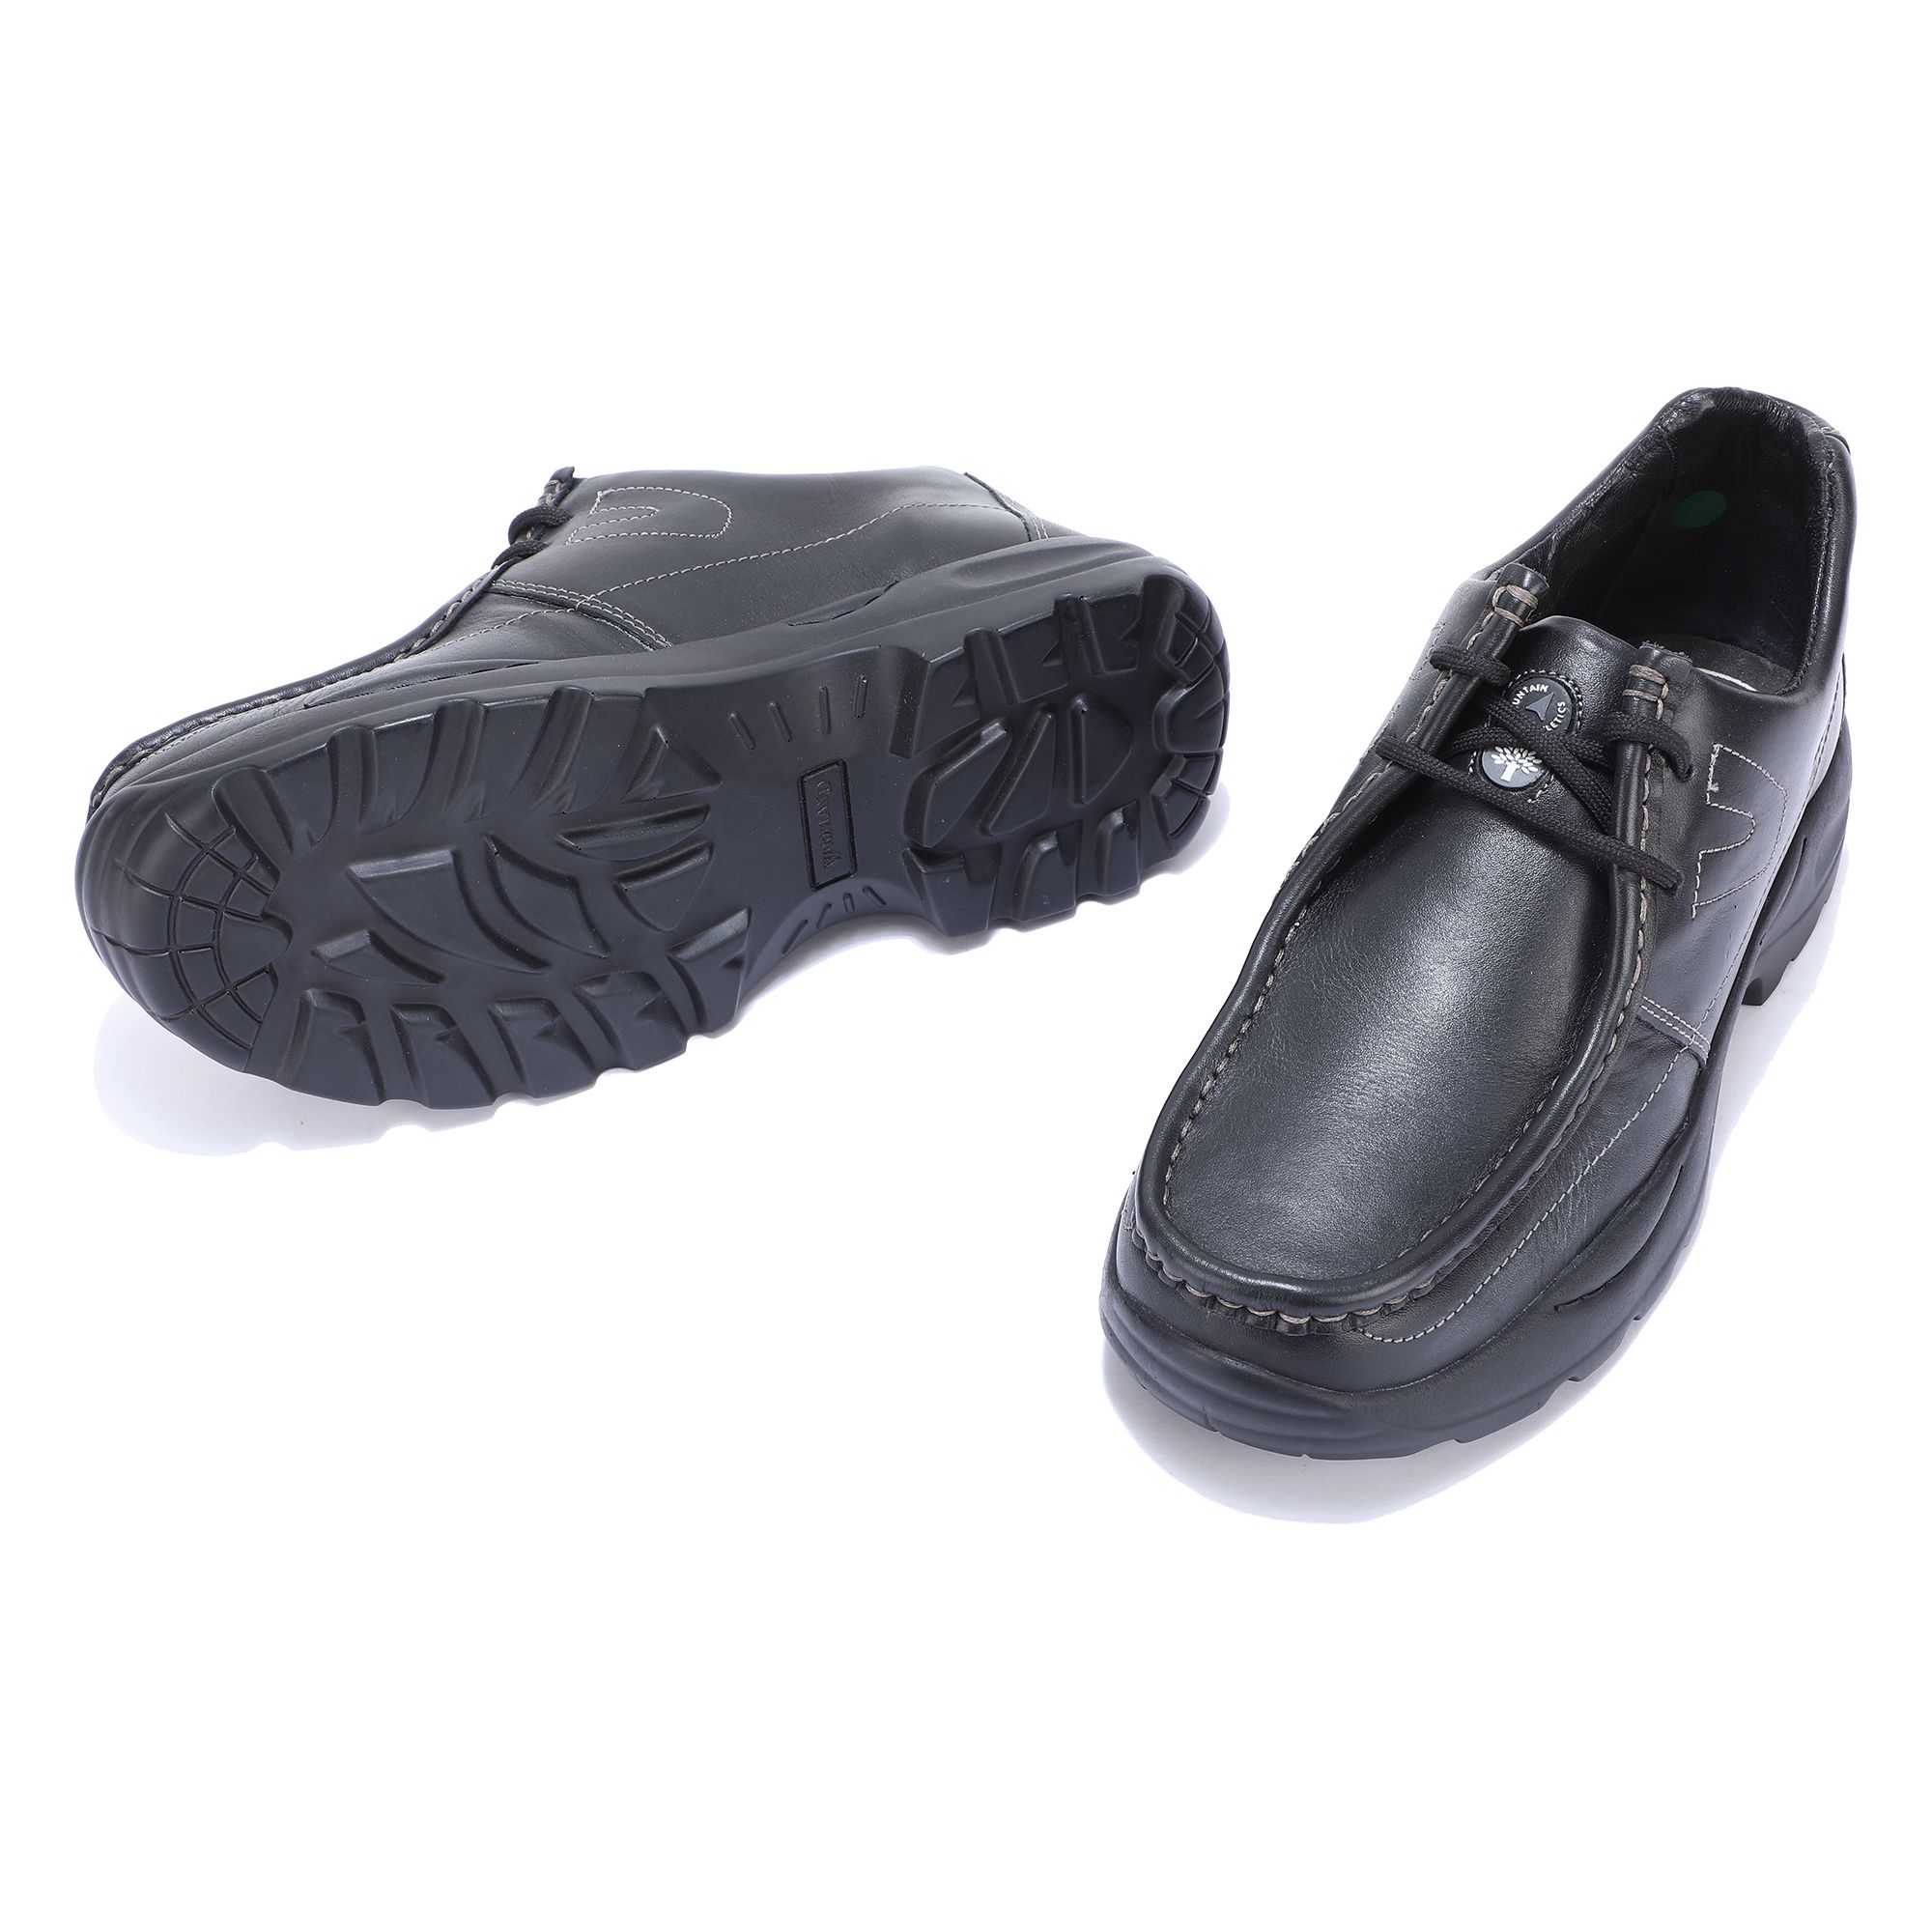 Women's shoes DEHA 9 (EU 39) sneakers black leather BC970-39 | eBay